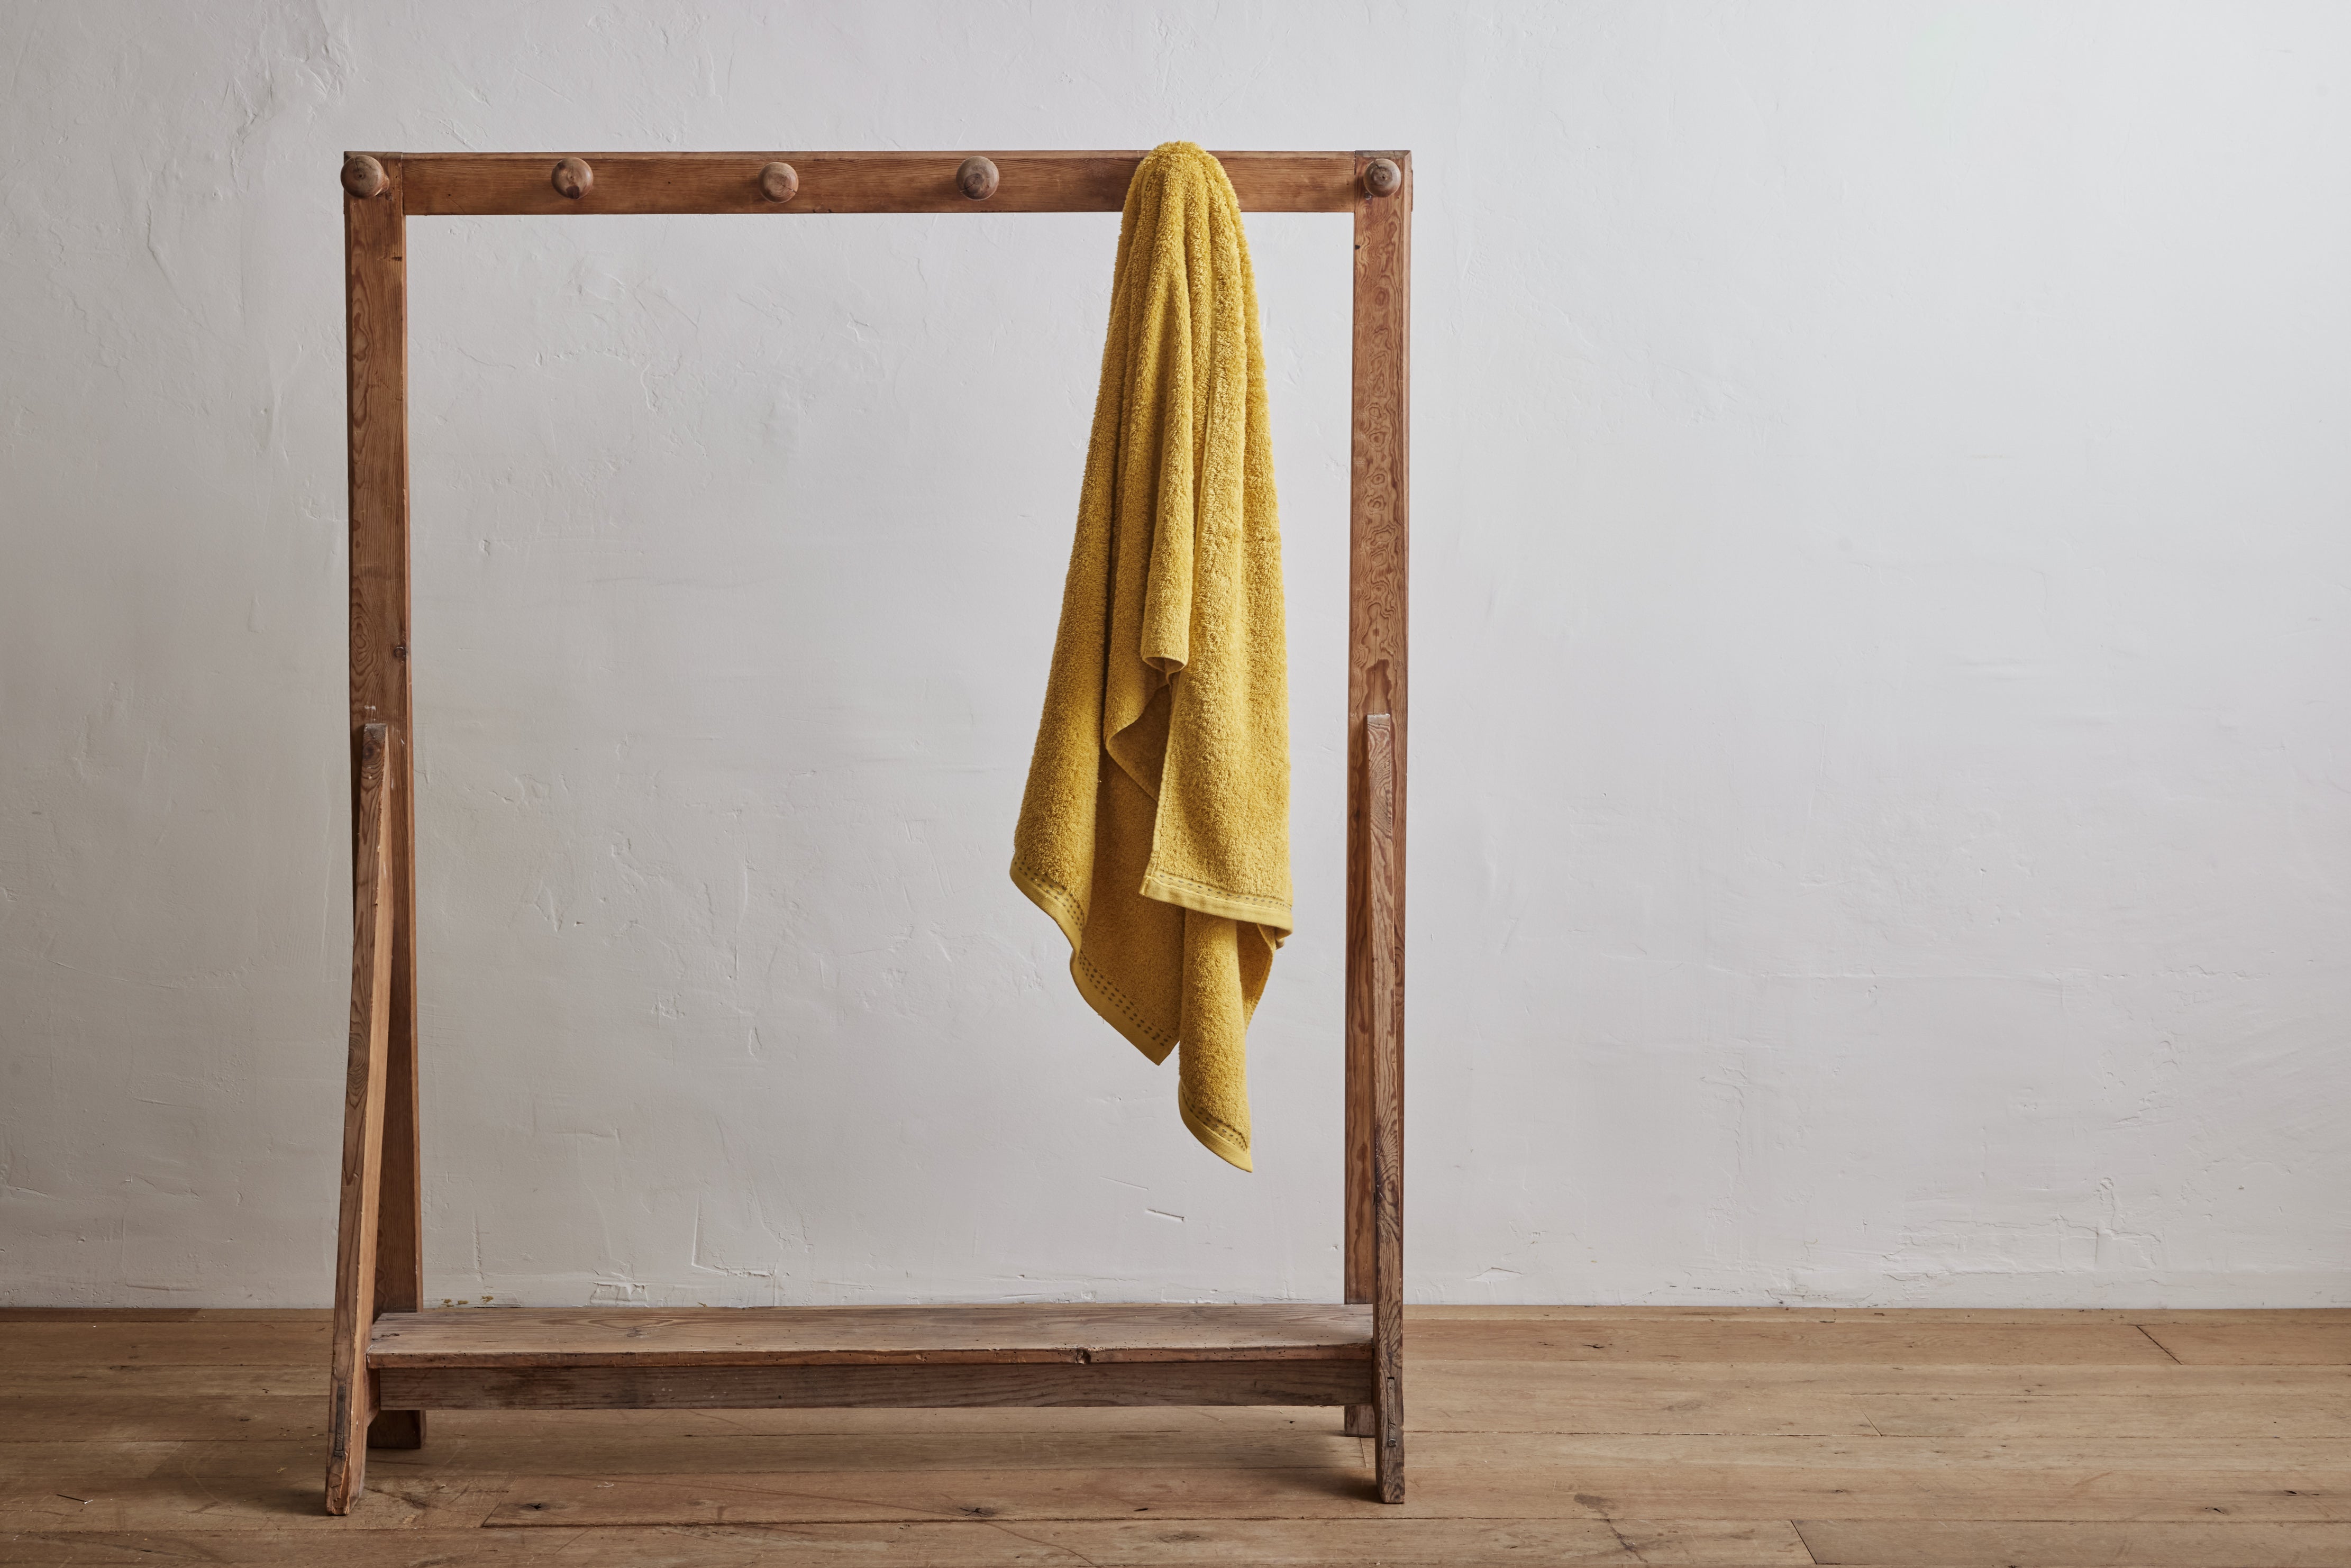 Nickey Kehoe Towel in Mustard